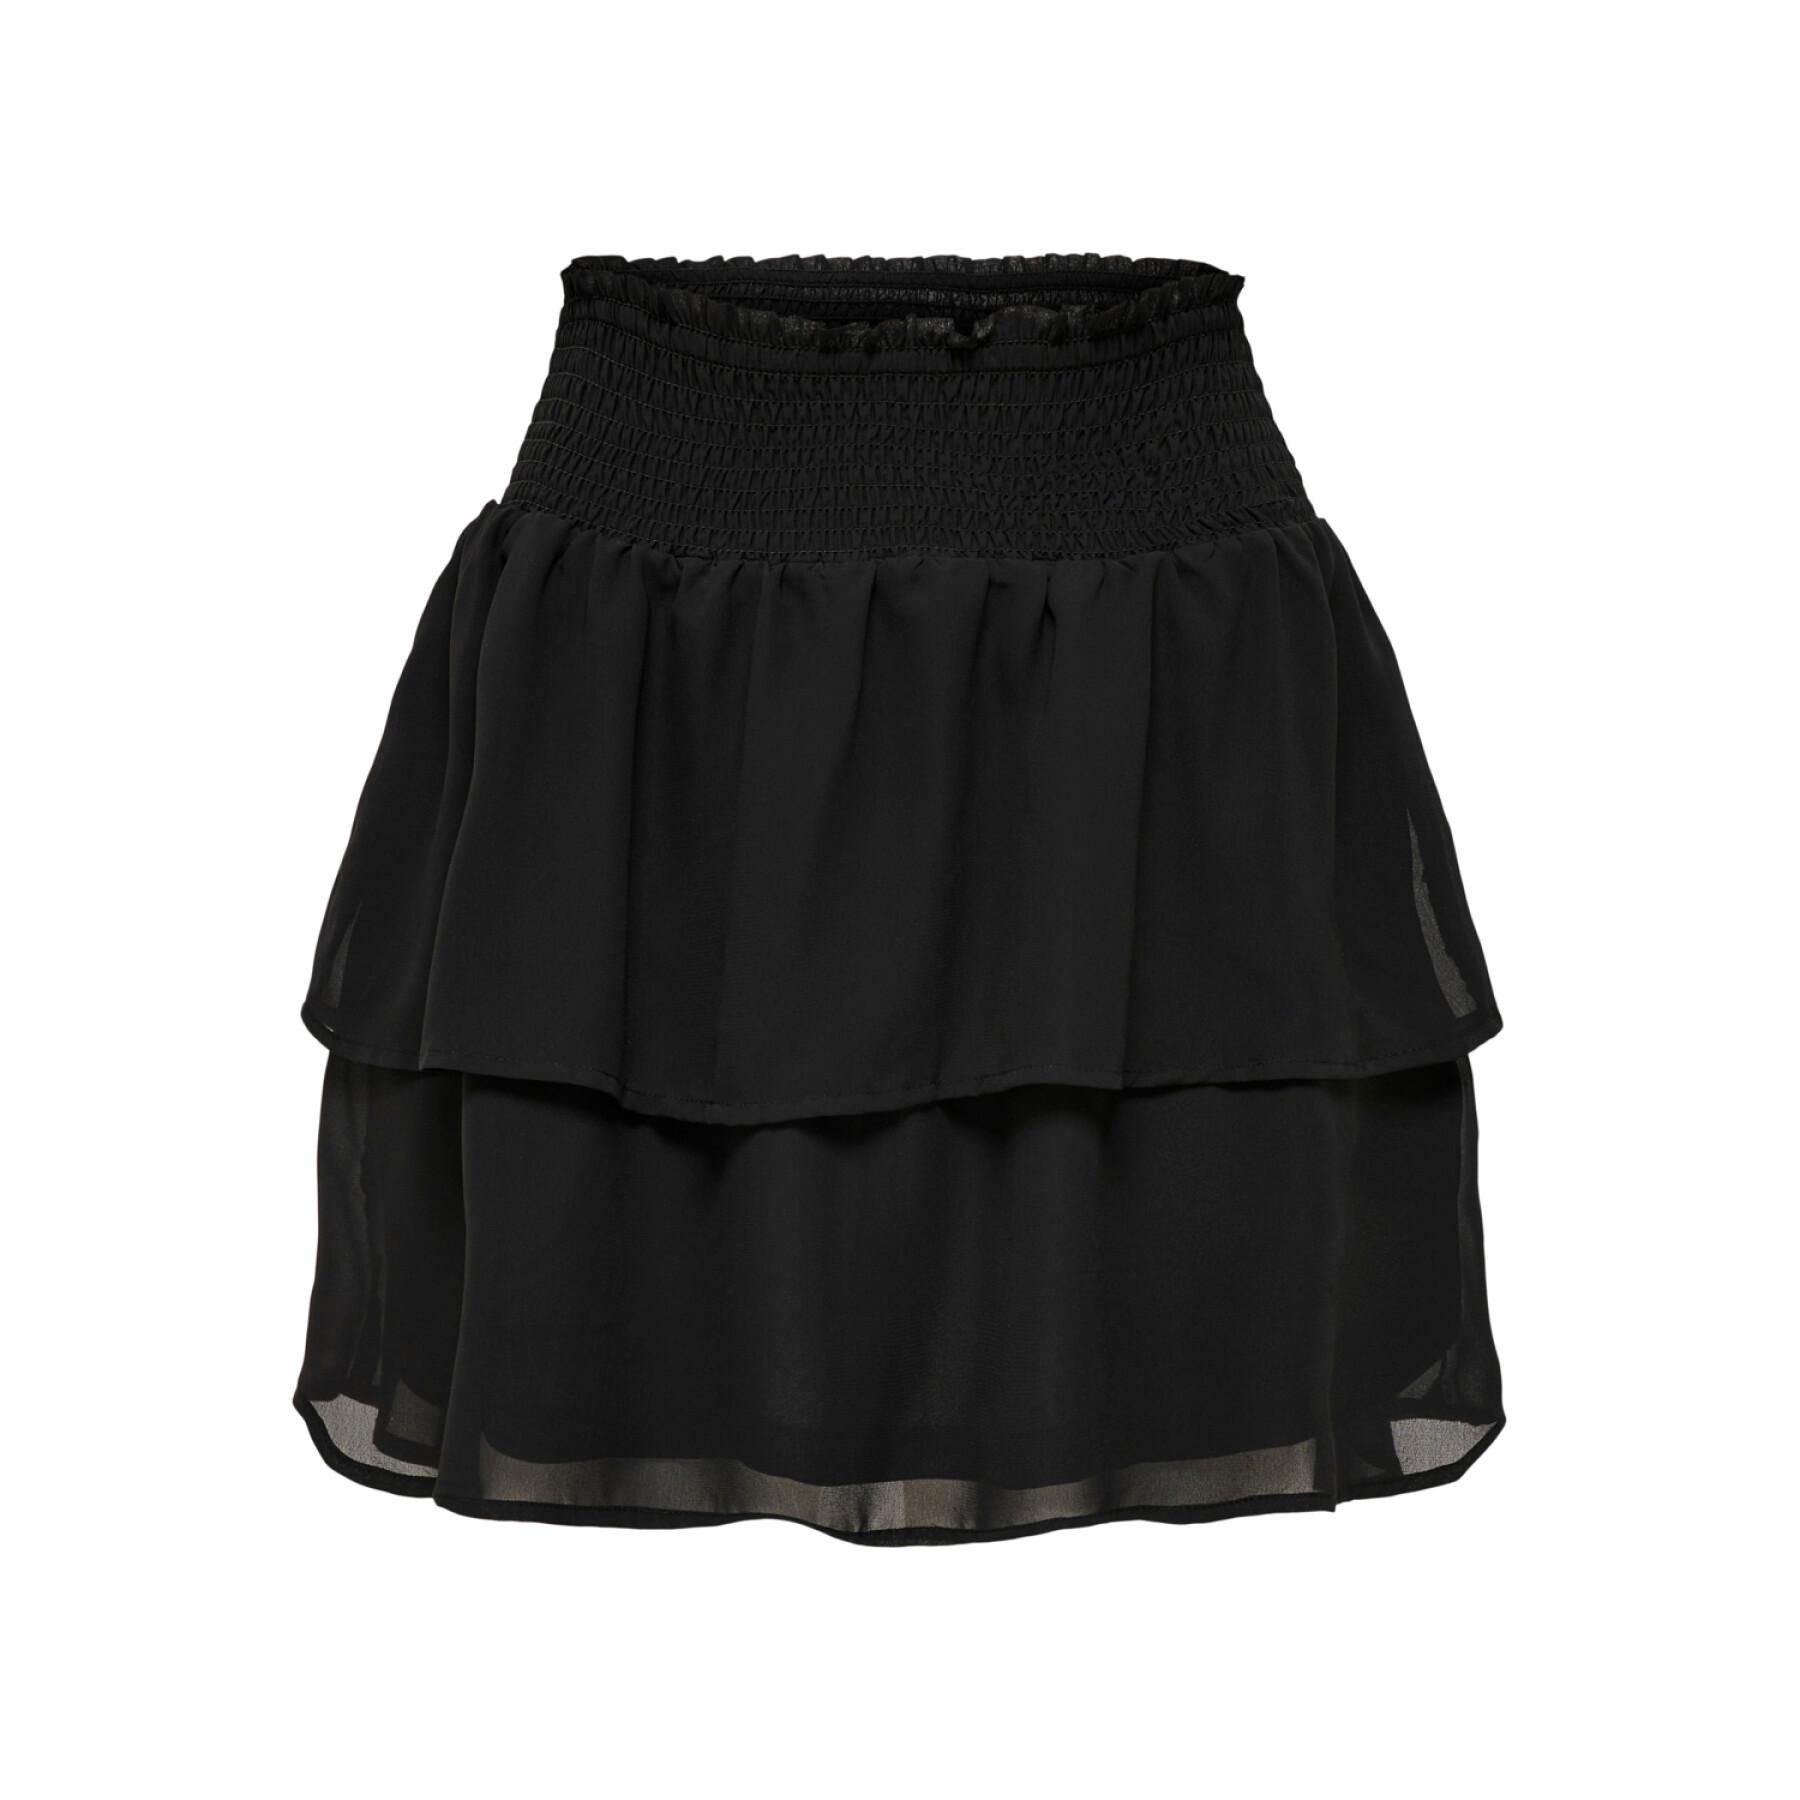 - Women & layered star Only - - smock onlann Women\'s Clothing Skirts Shorts skirt